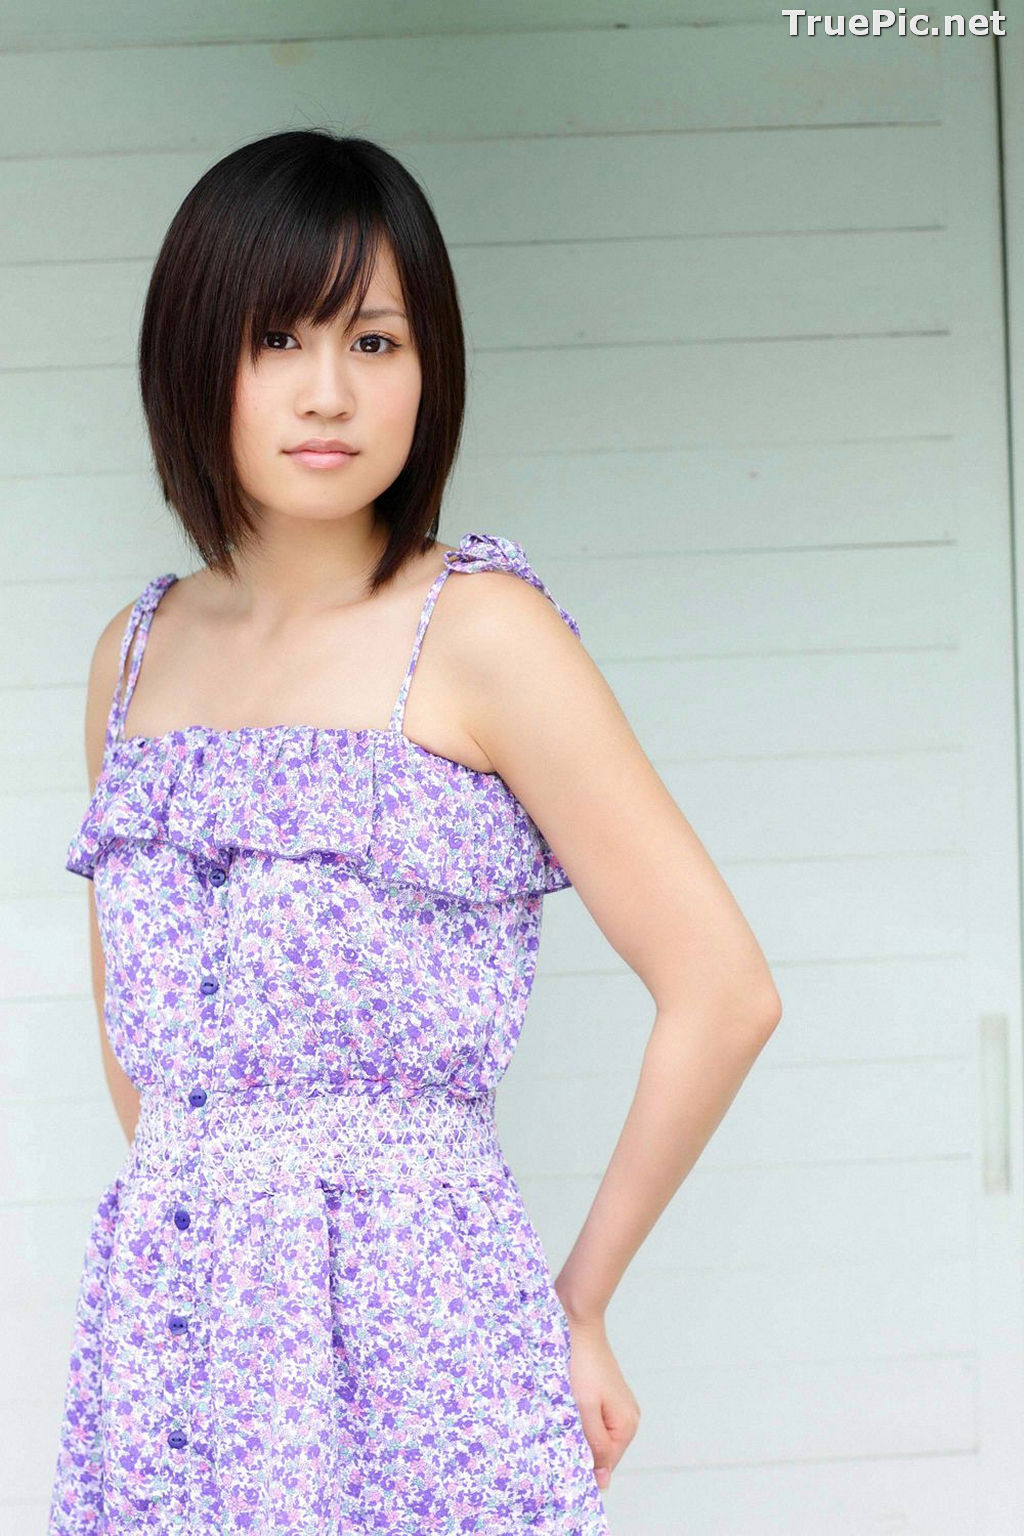 Image [YS Web] Vol.330 - Japanese Actress and Singer - Maeda Atsuko - TruePic.net - Picture-60